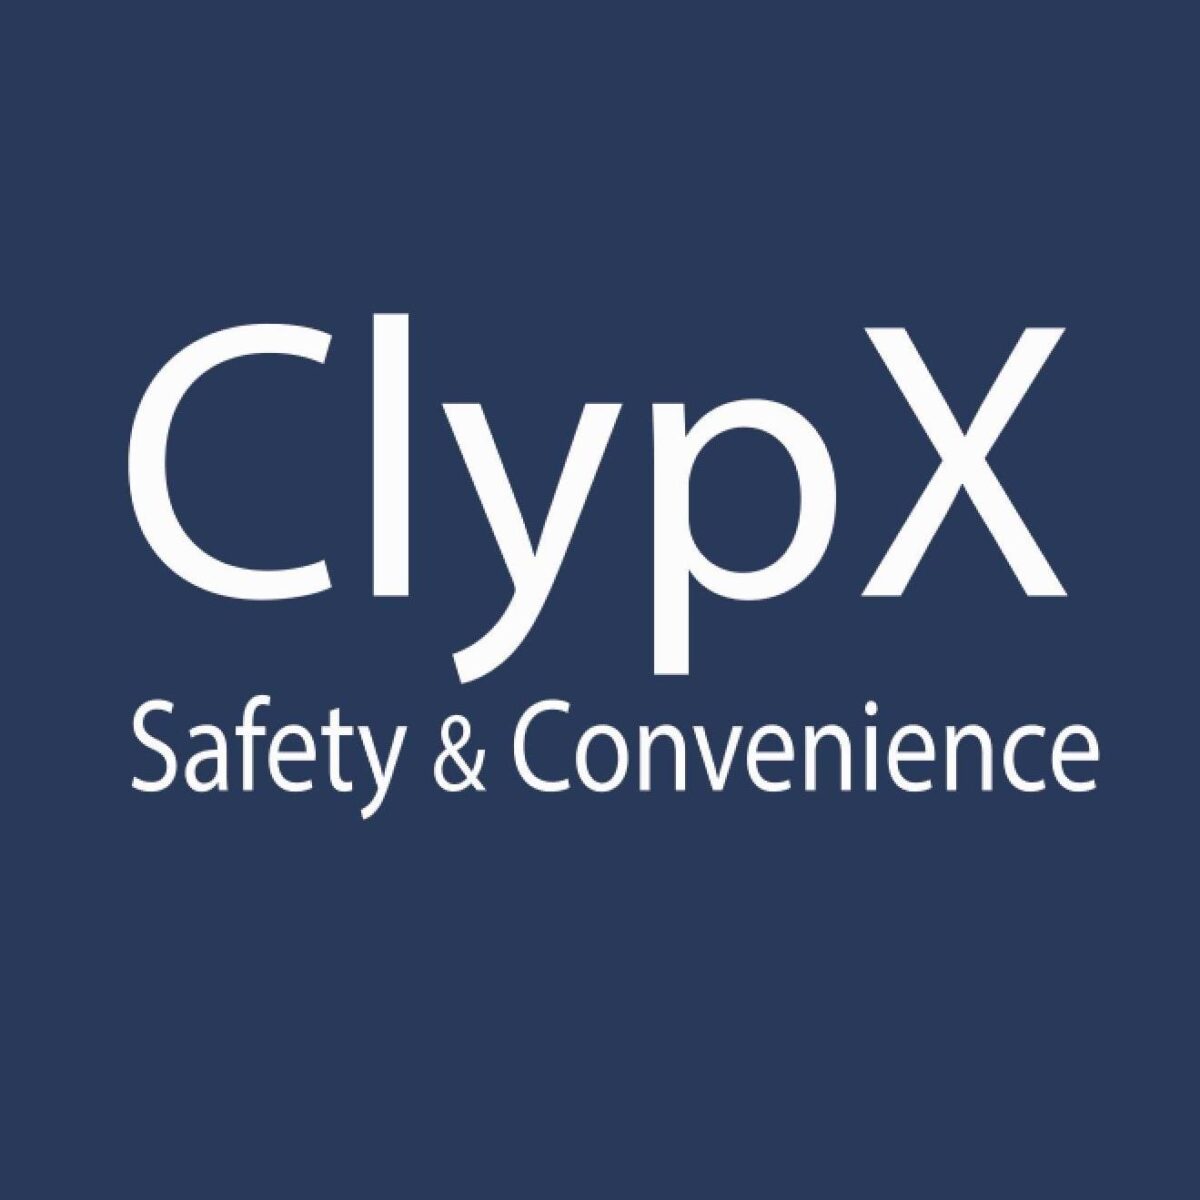 ClypX logo